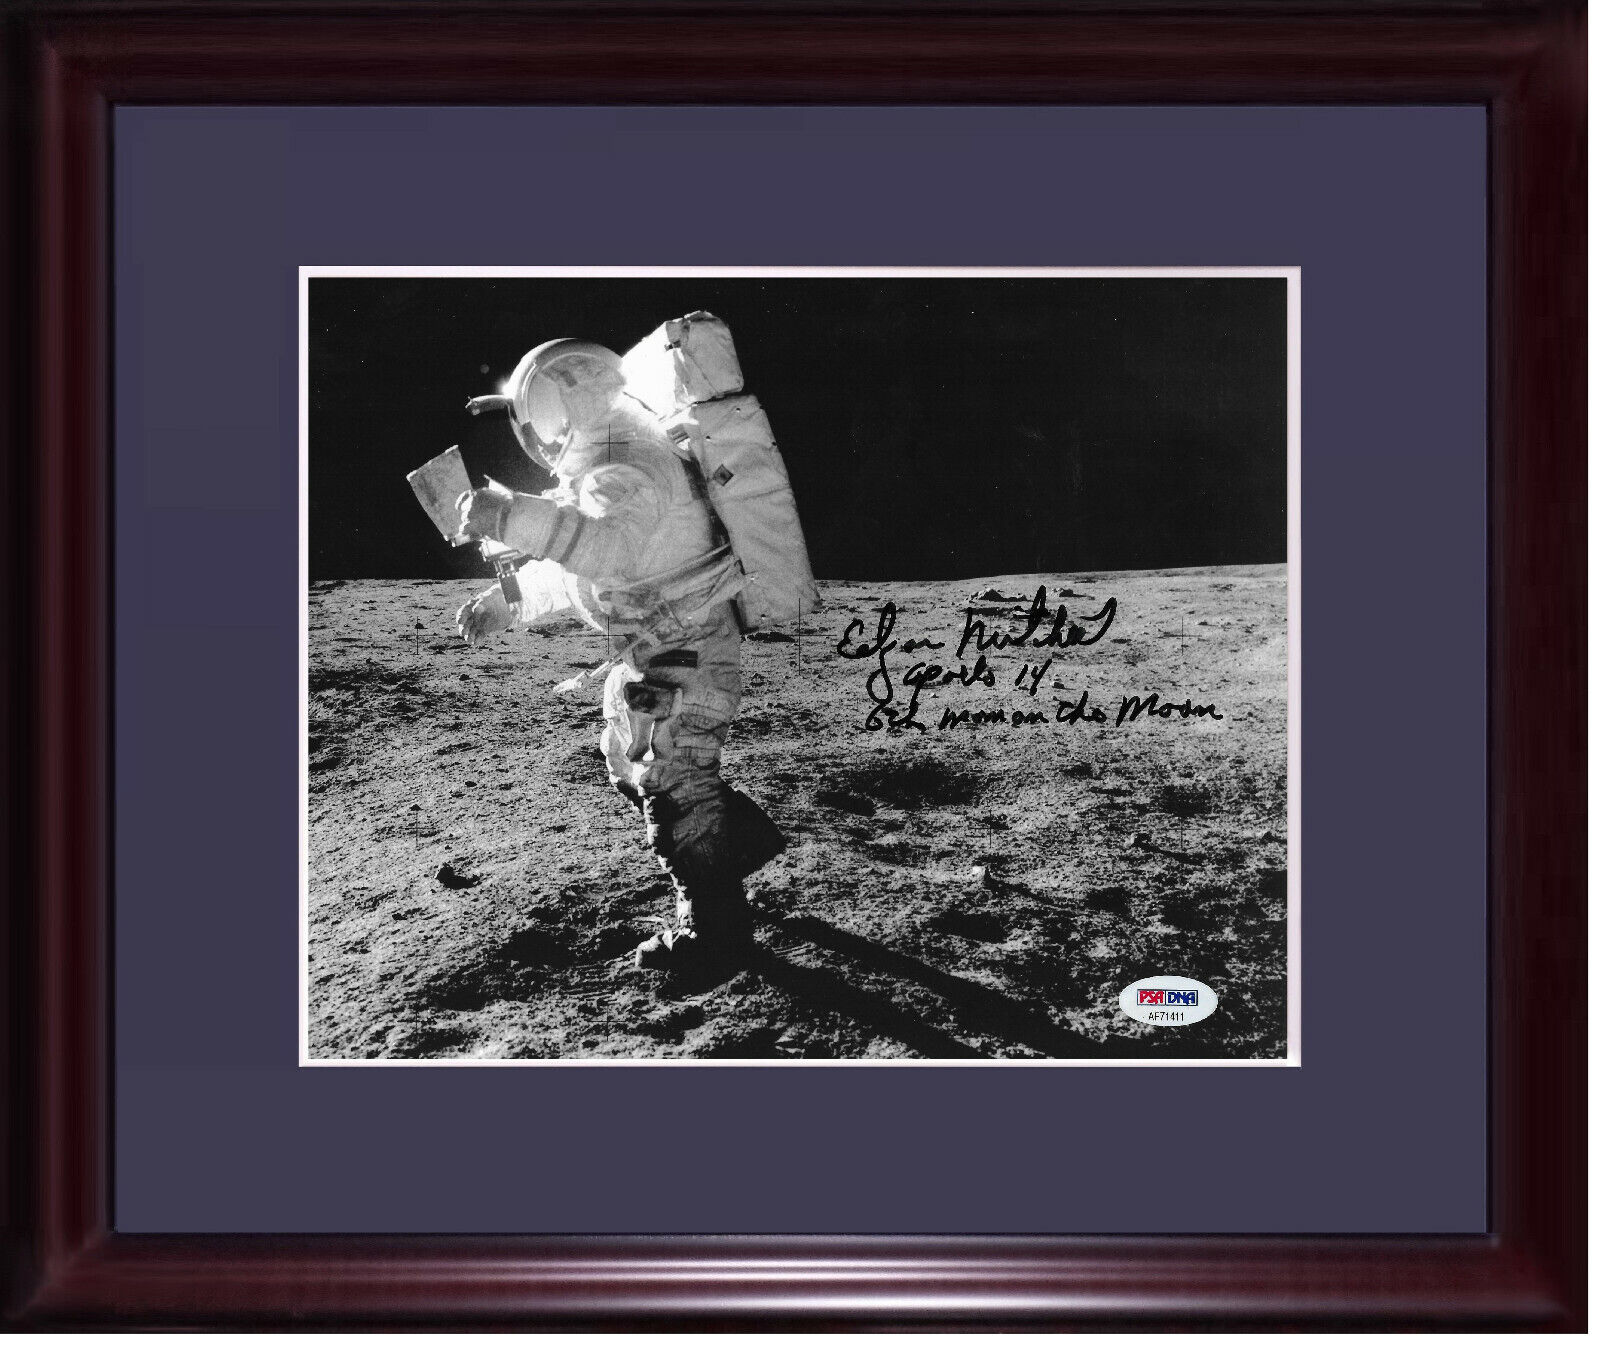 Edgar Mitchell Apollo 14 astronaut signed 8x10 photo INS framed auto PSA/DNA COA